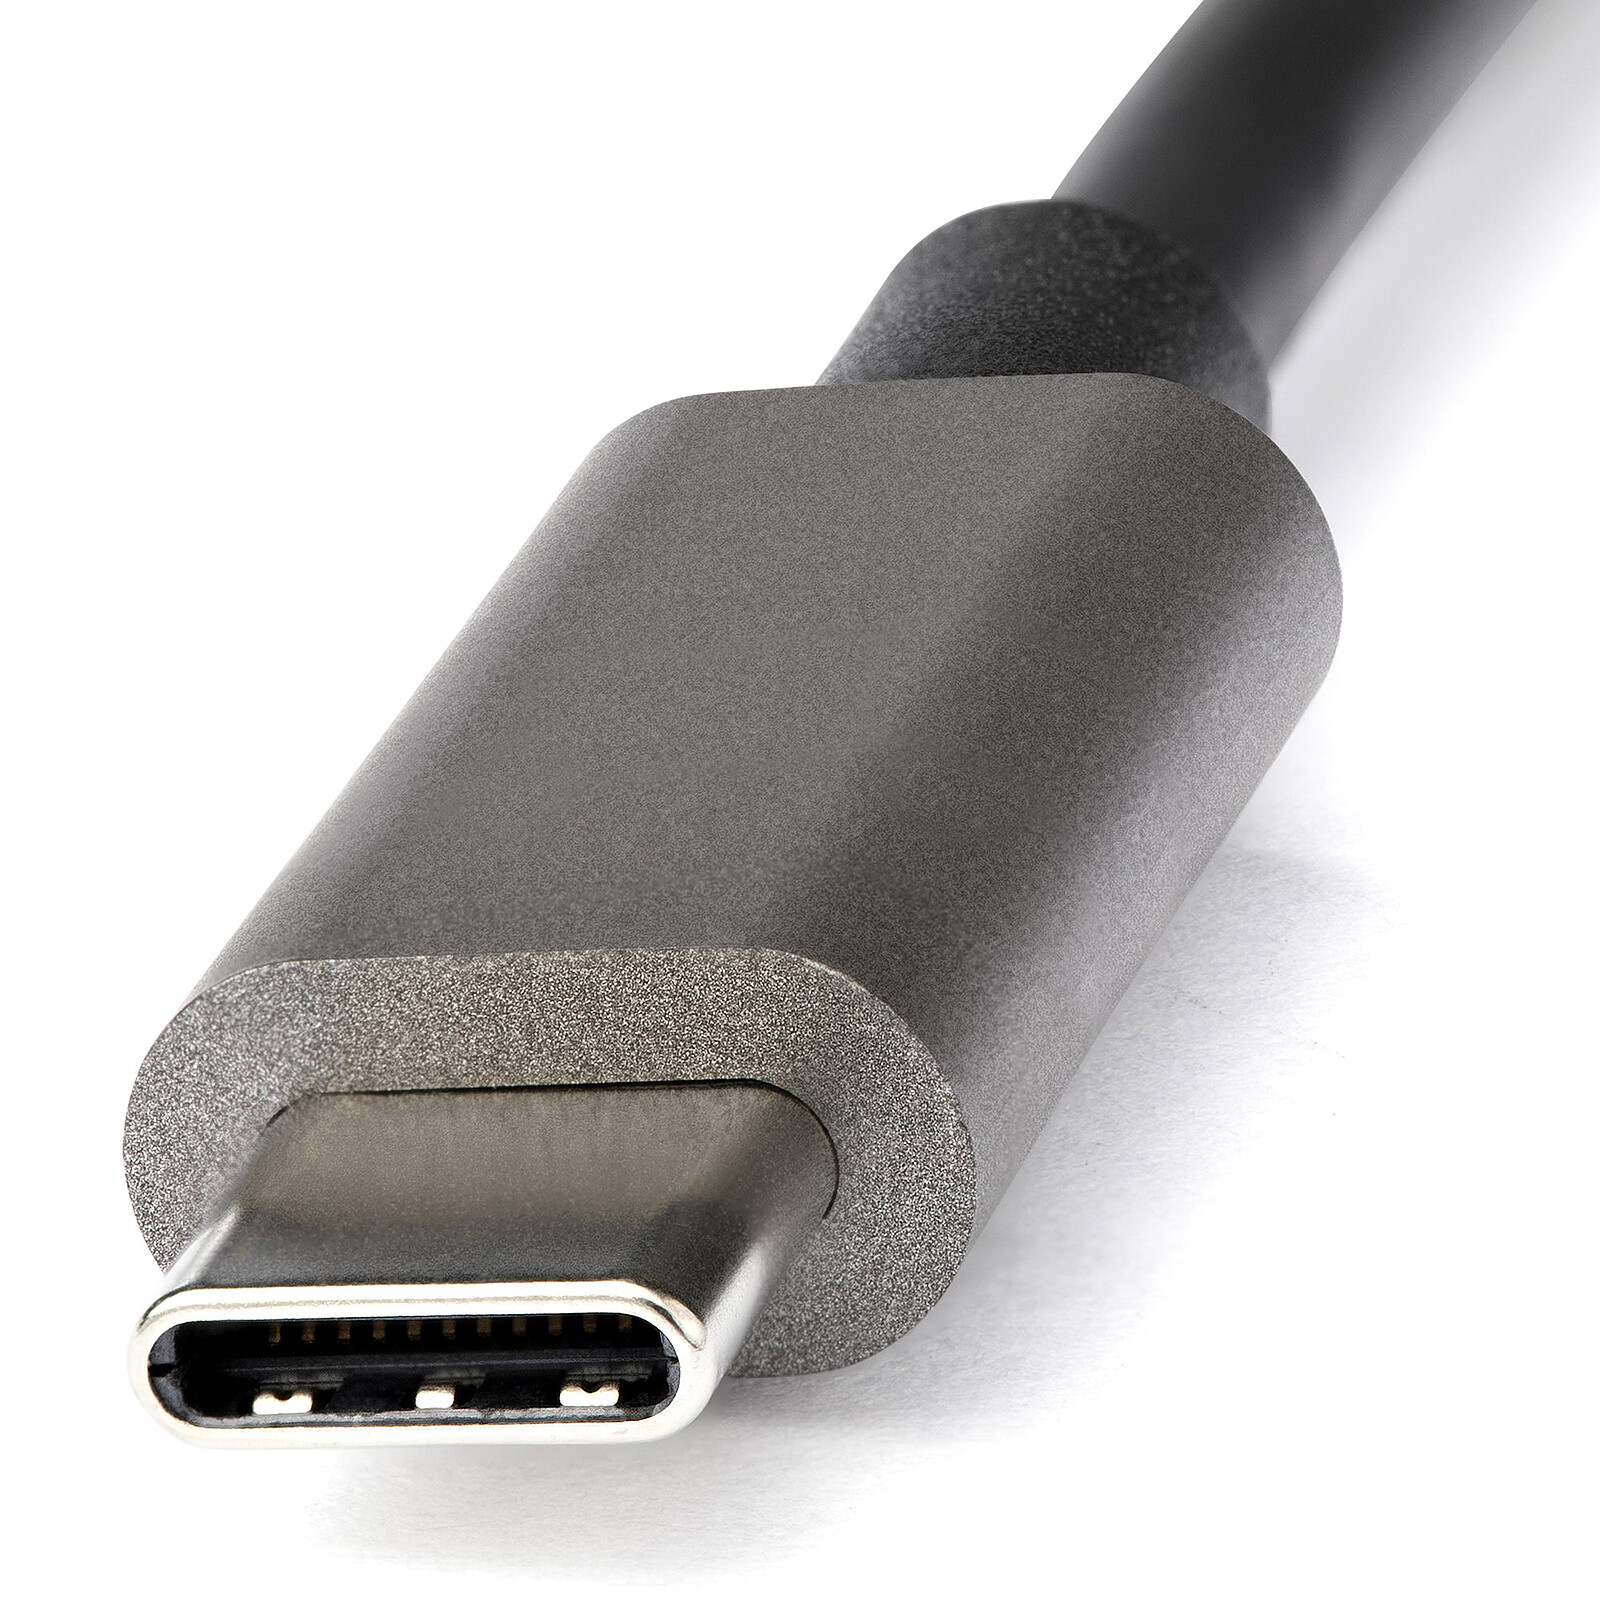 Câble adaptateur HDMI vers Micro HDMI - Noir - Startech - Cable